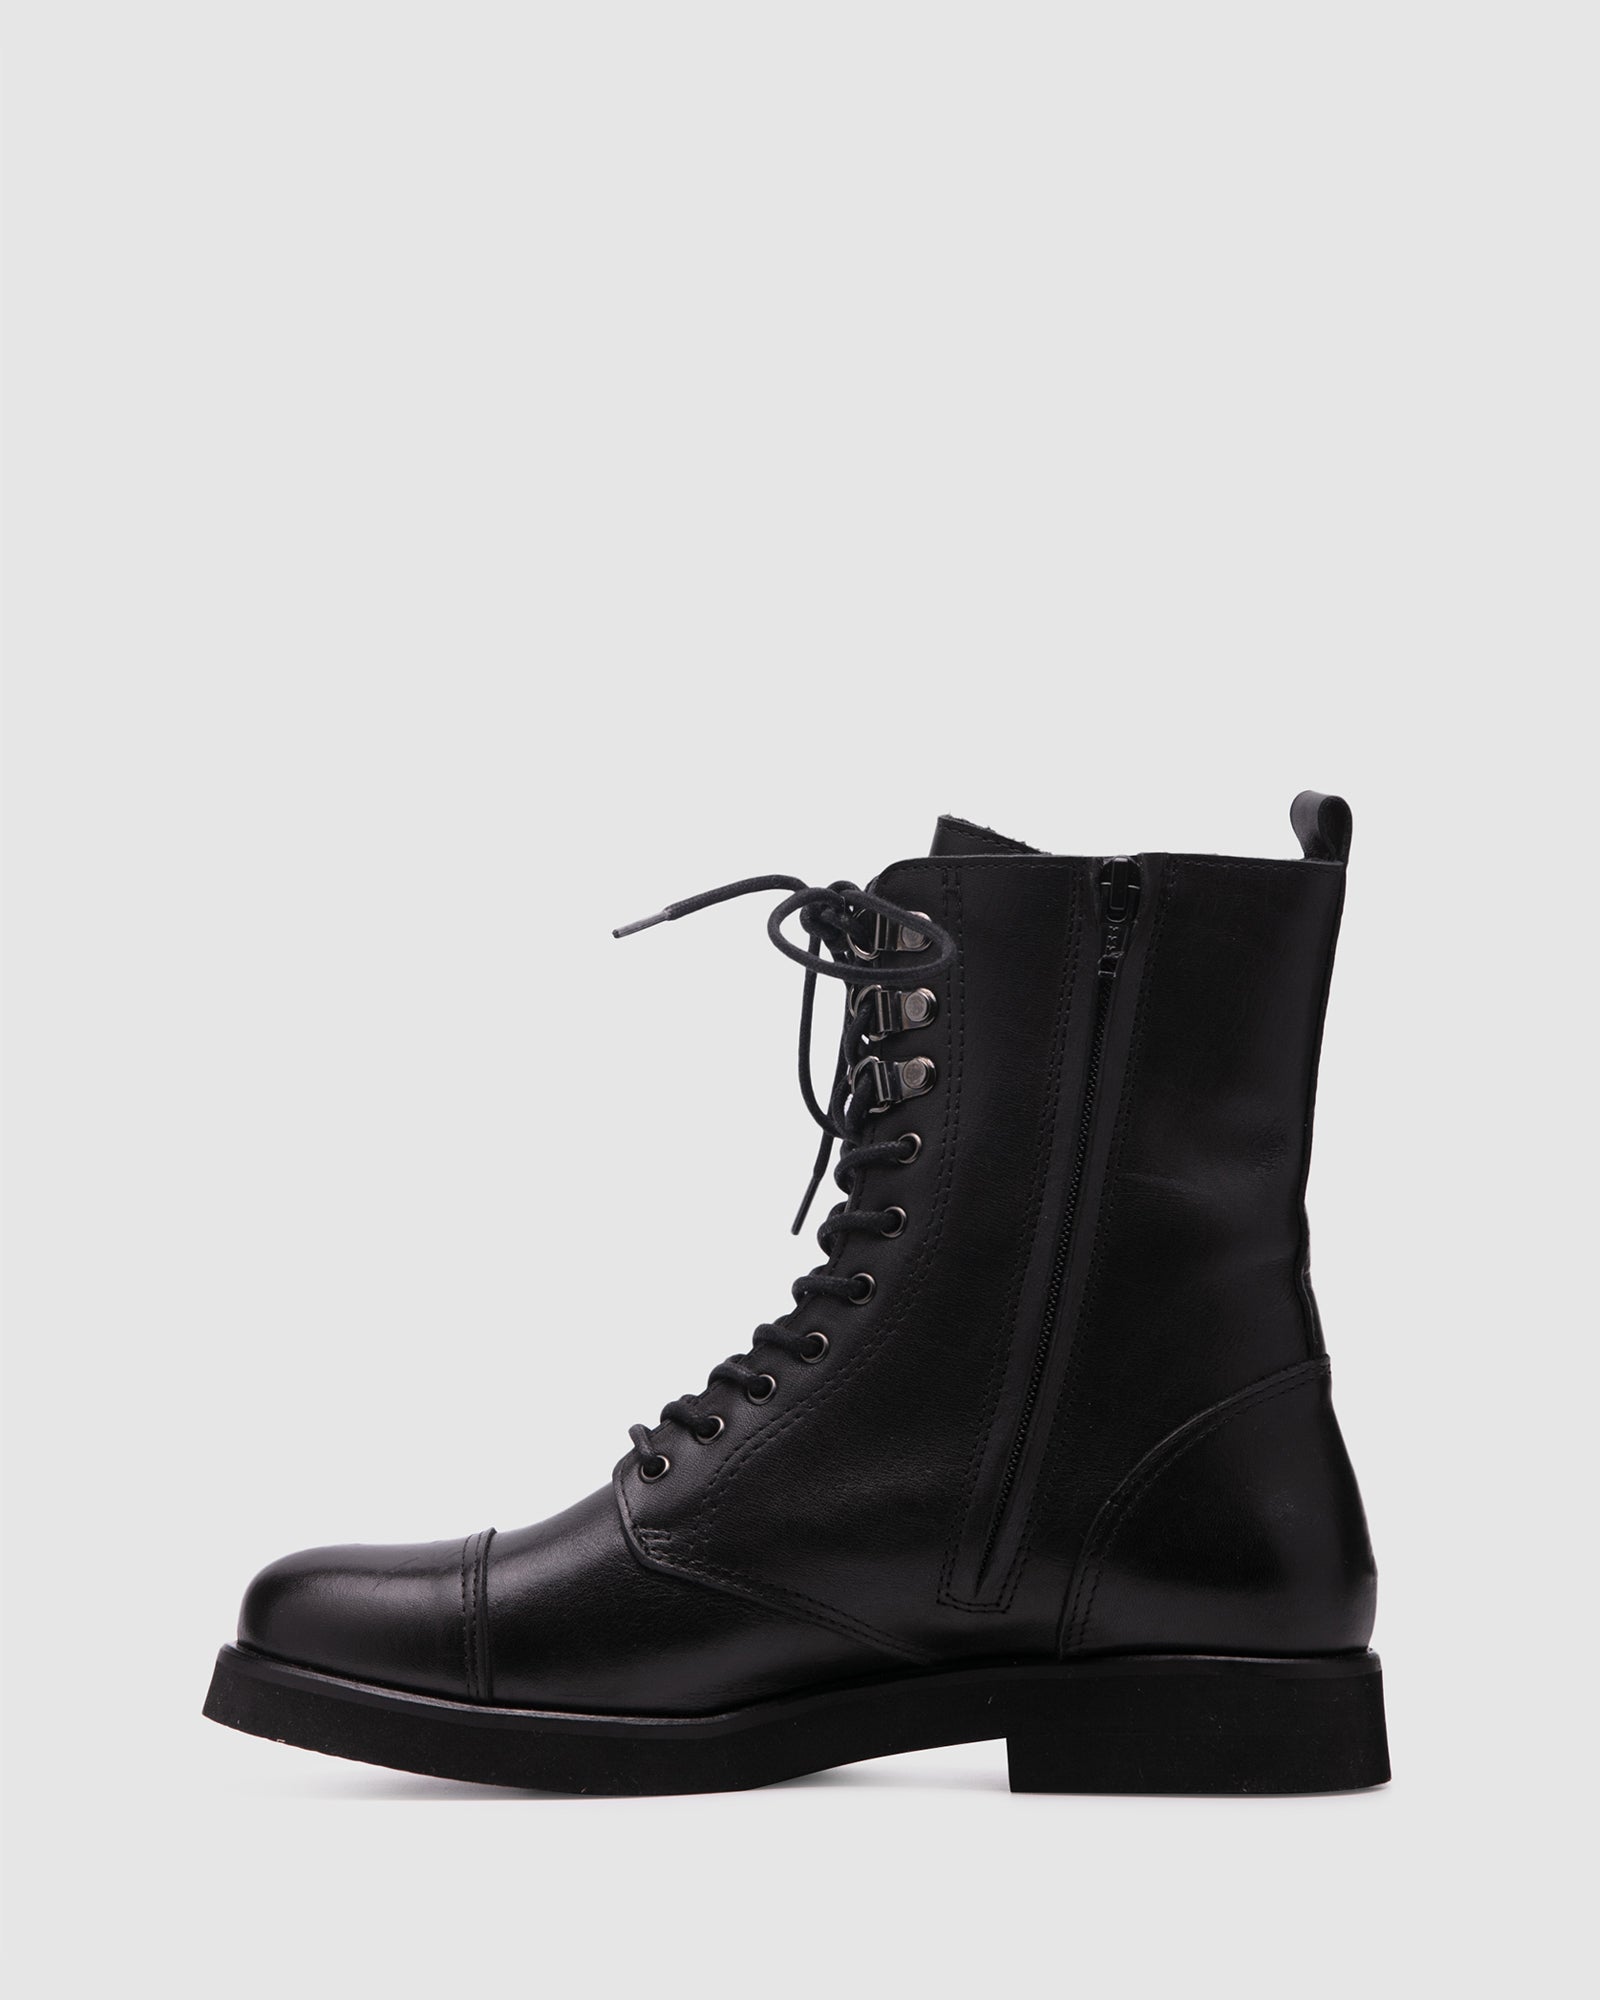 avid boot - black